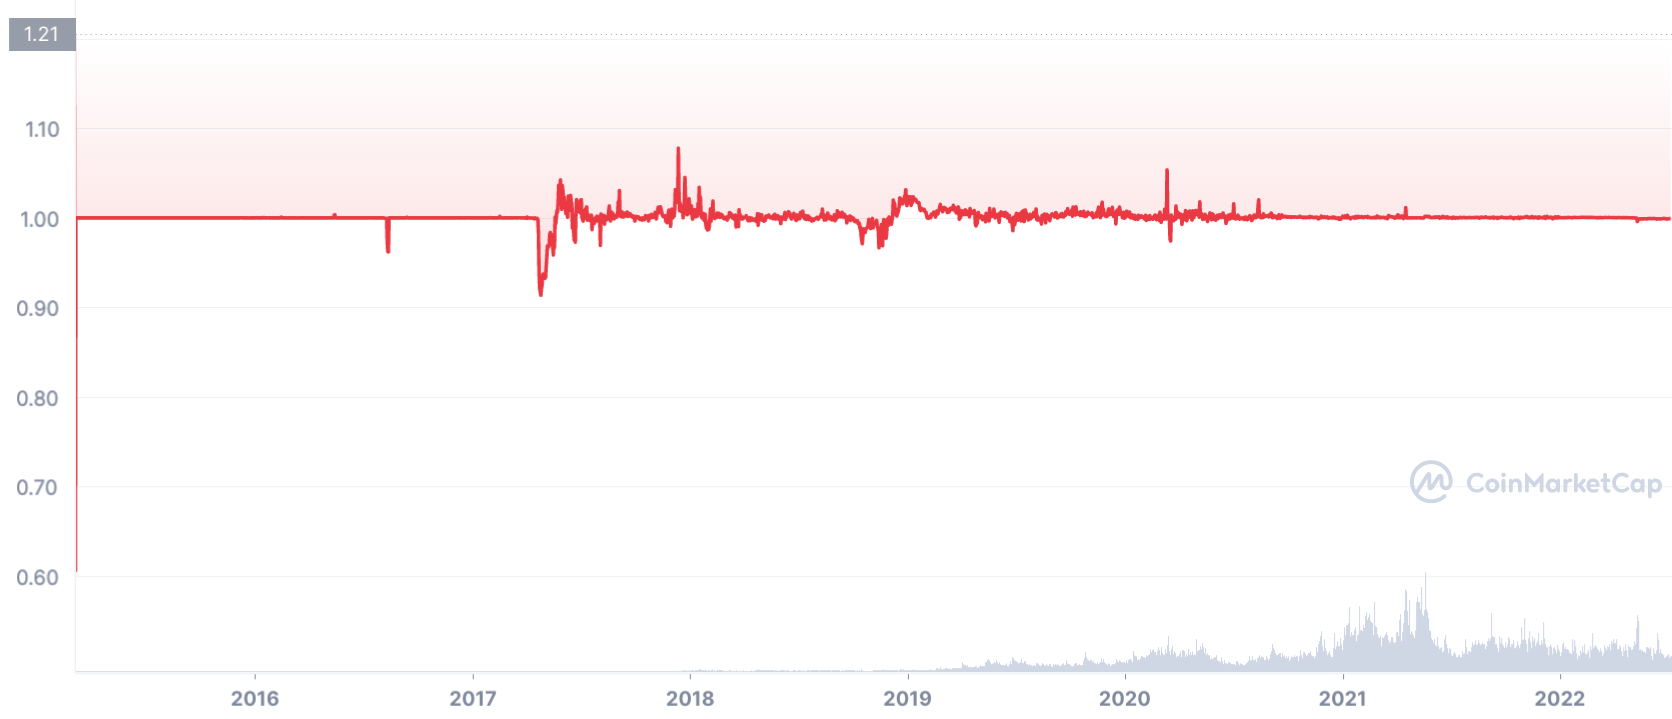 Wykres cen USDT od 2015 r. Źródło: CoinMarketCap